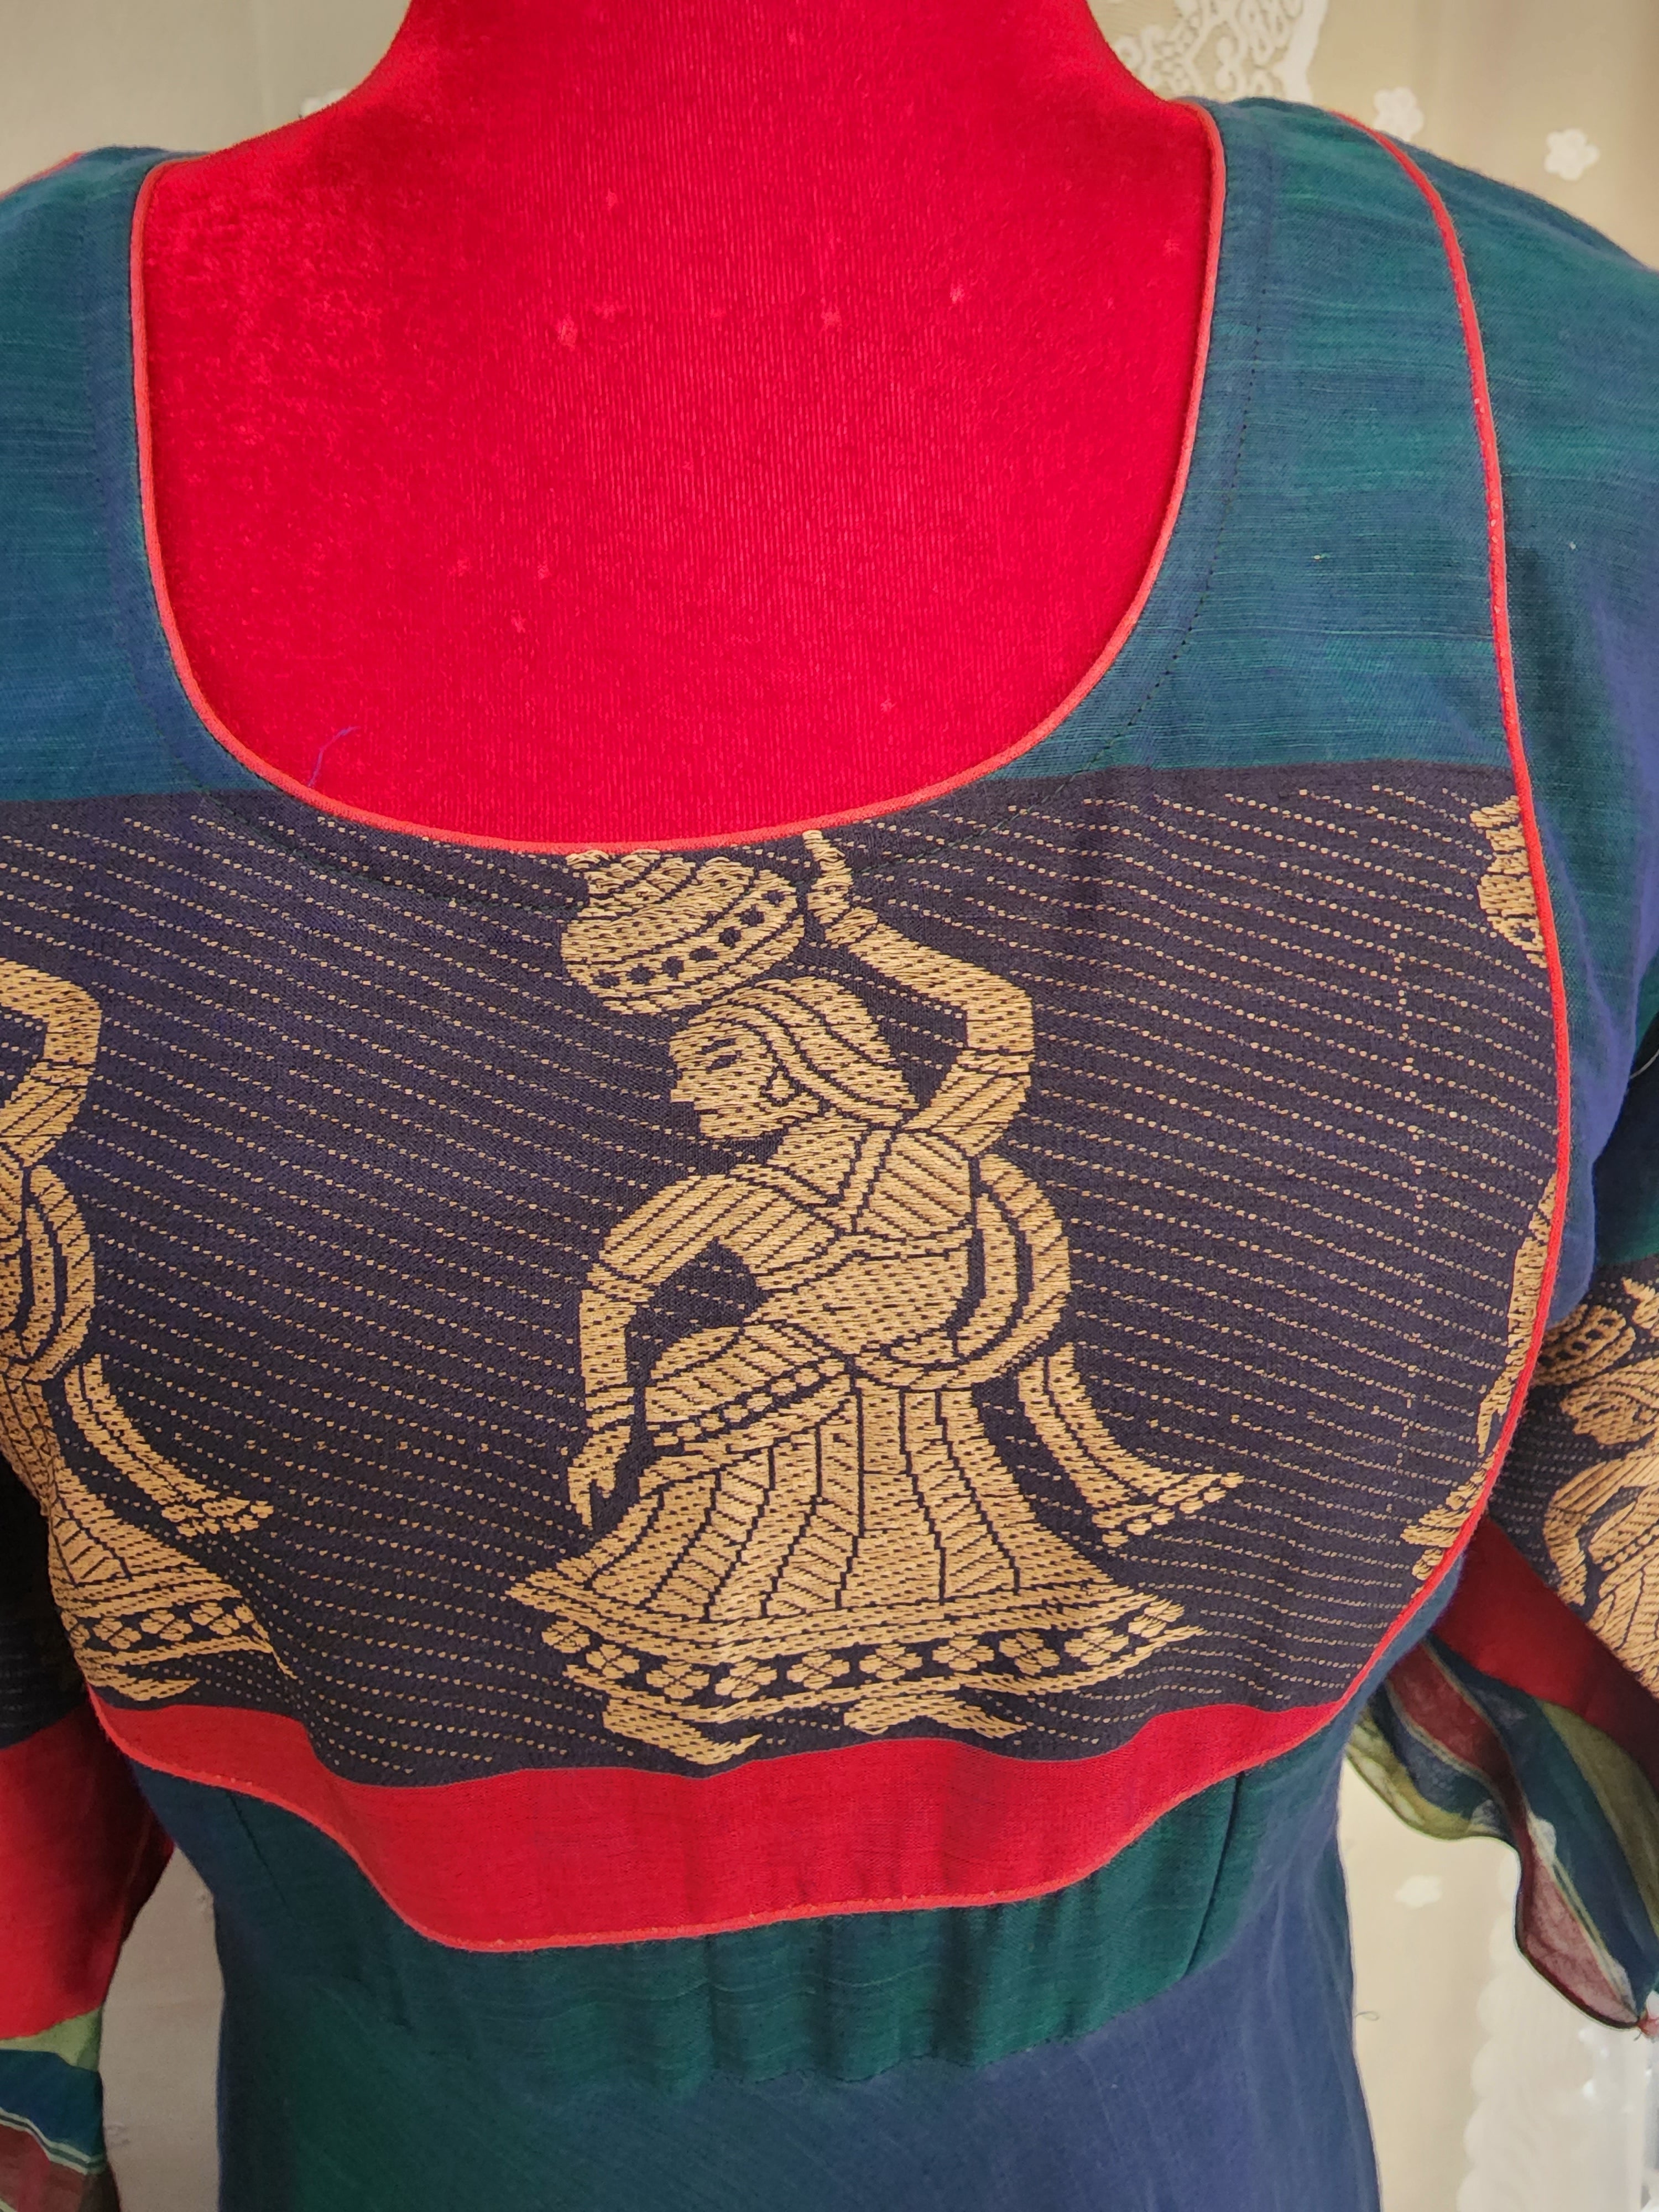 Varalika narayanpet mercedized cotton long dress